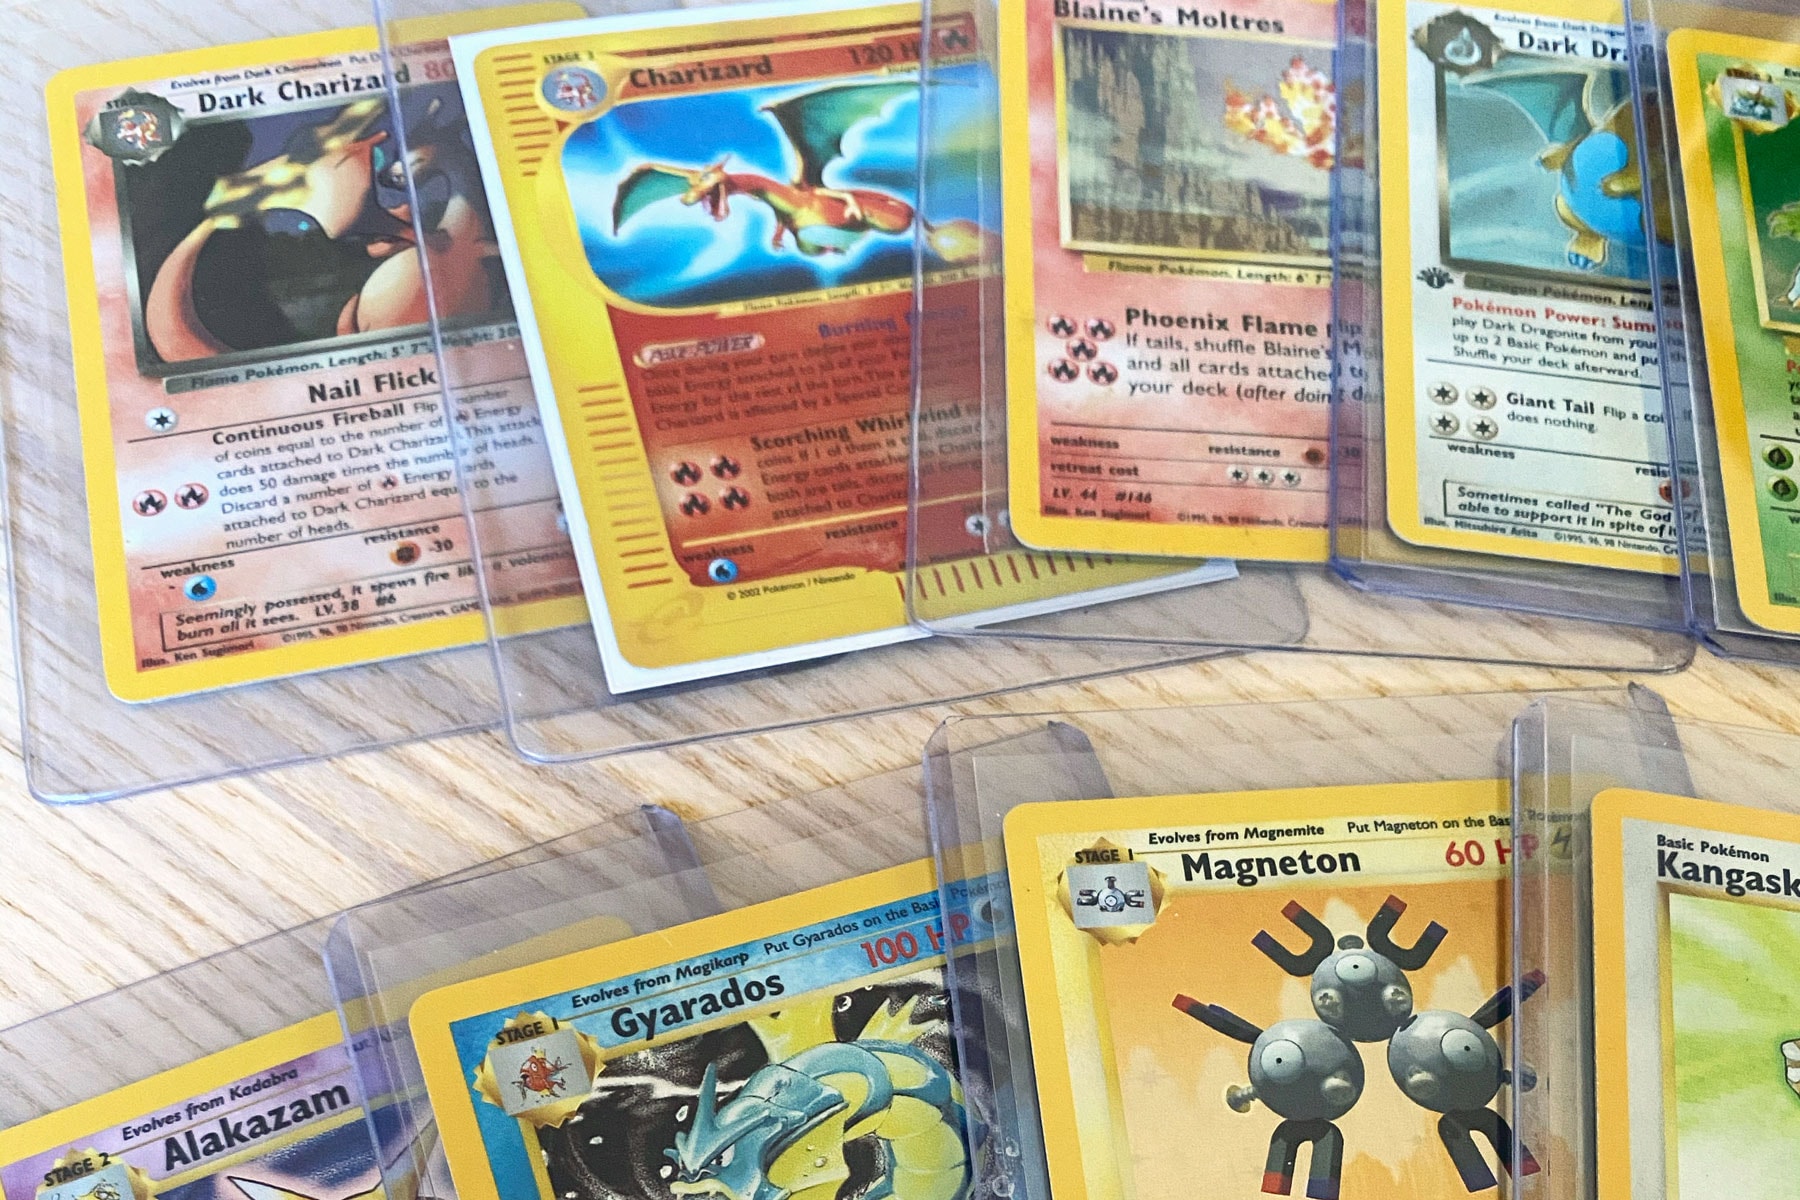 Pokémon Creators' Fanzine Fetches High Price